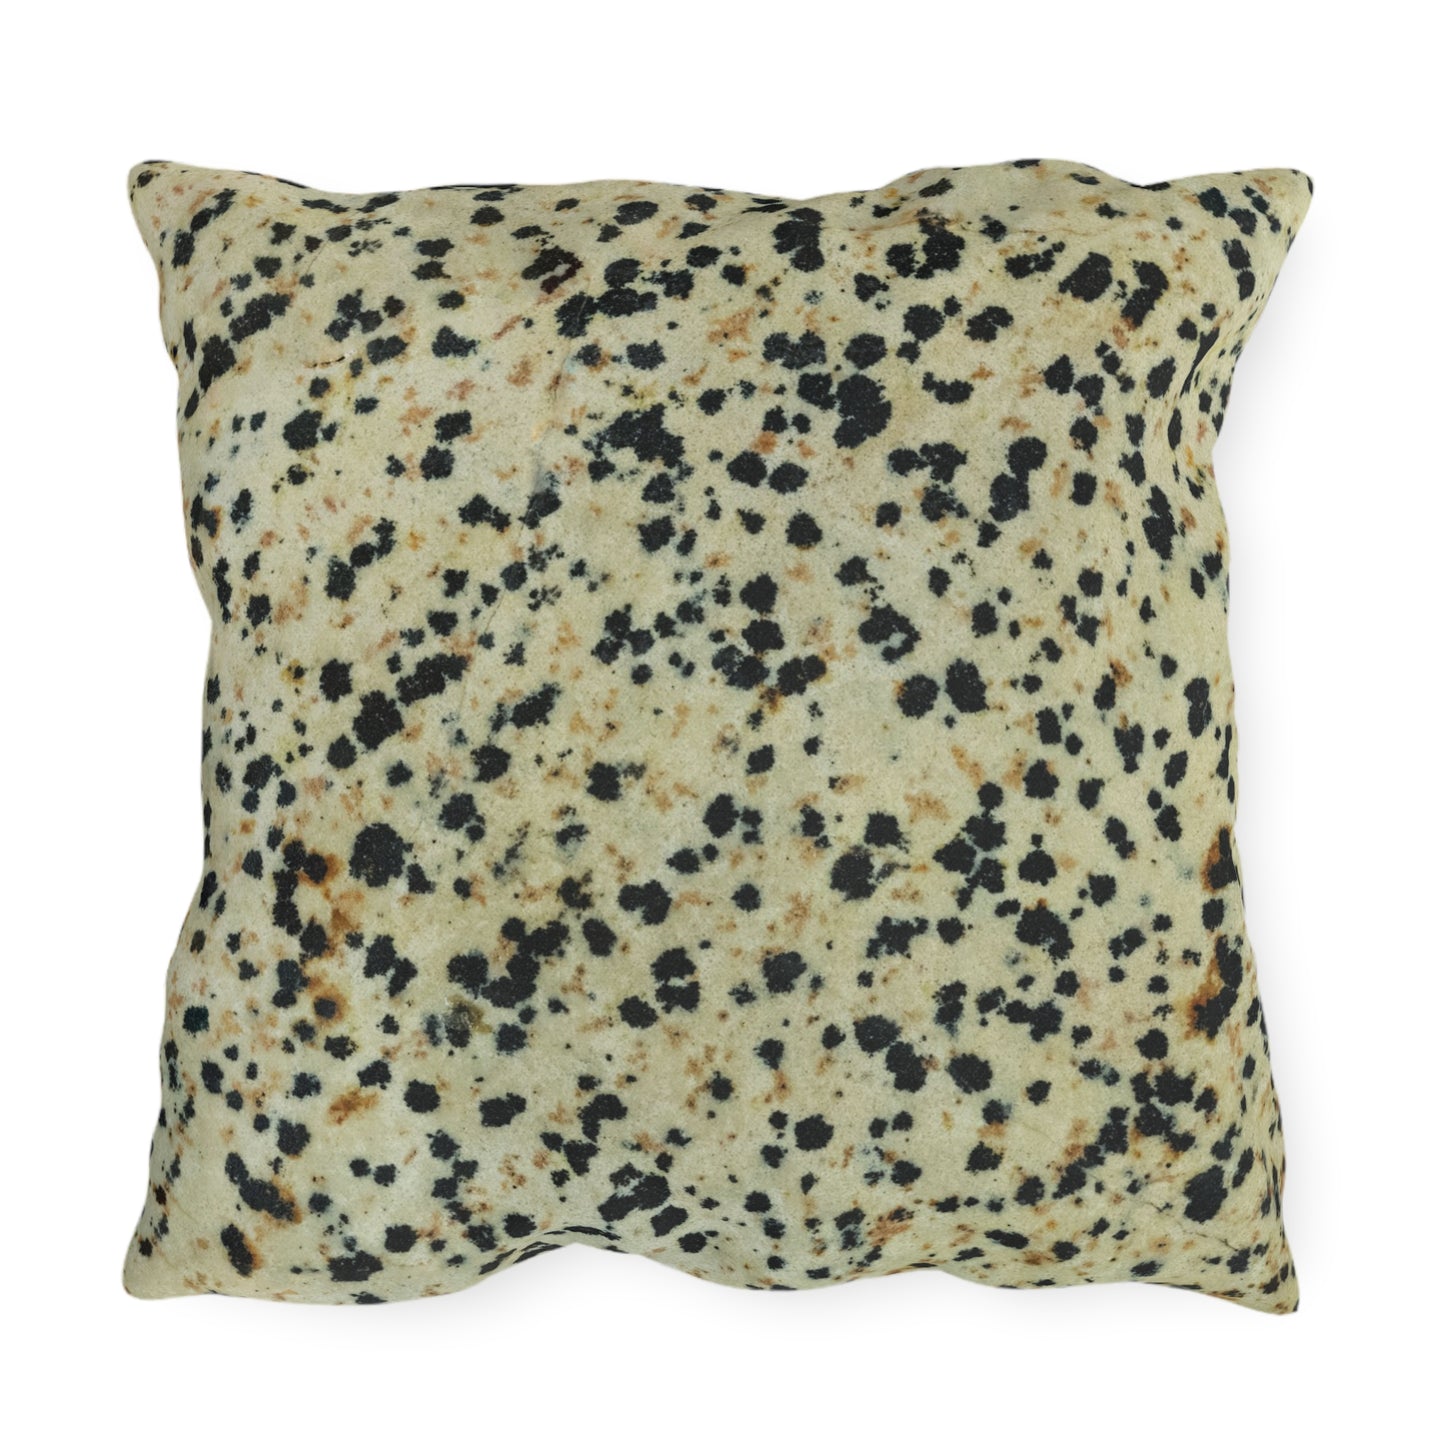 Dalmatian Jasper Transformations Outdoor Pillows